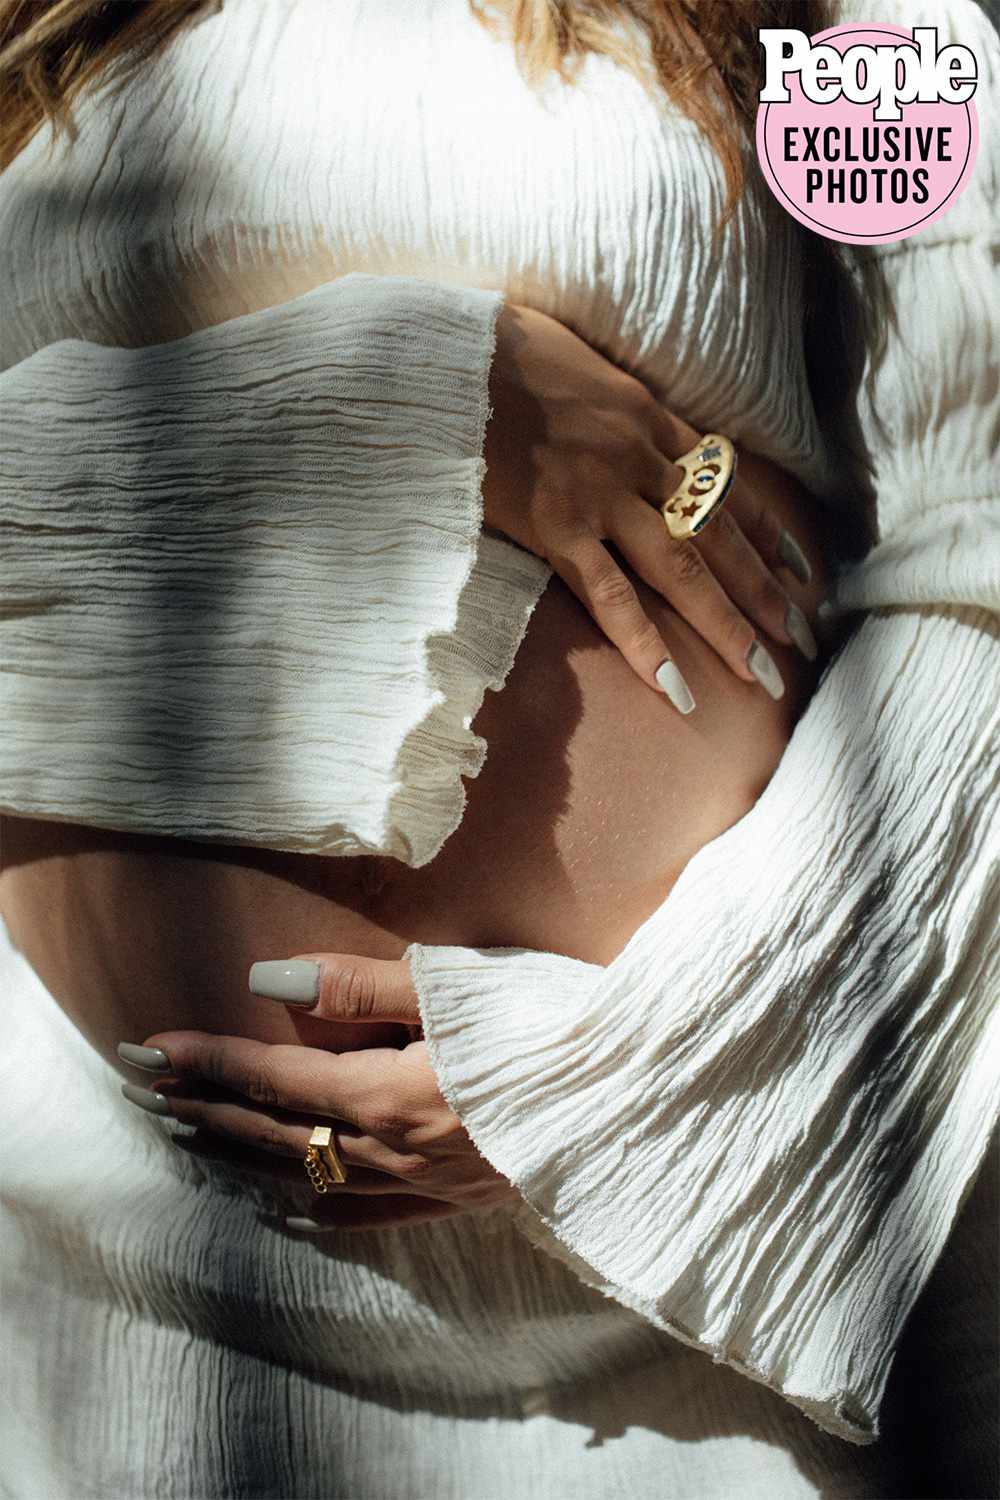 Inanna Sarkis Pregnancy Exclusive